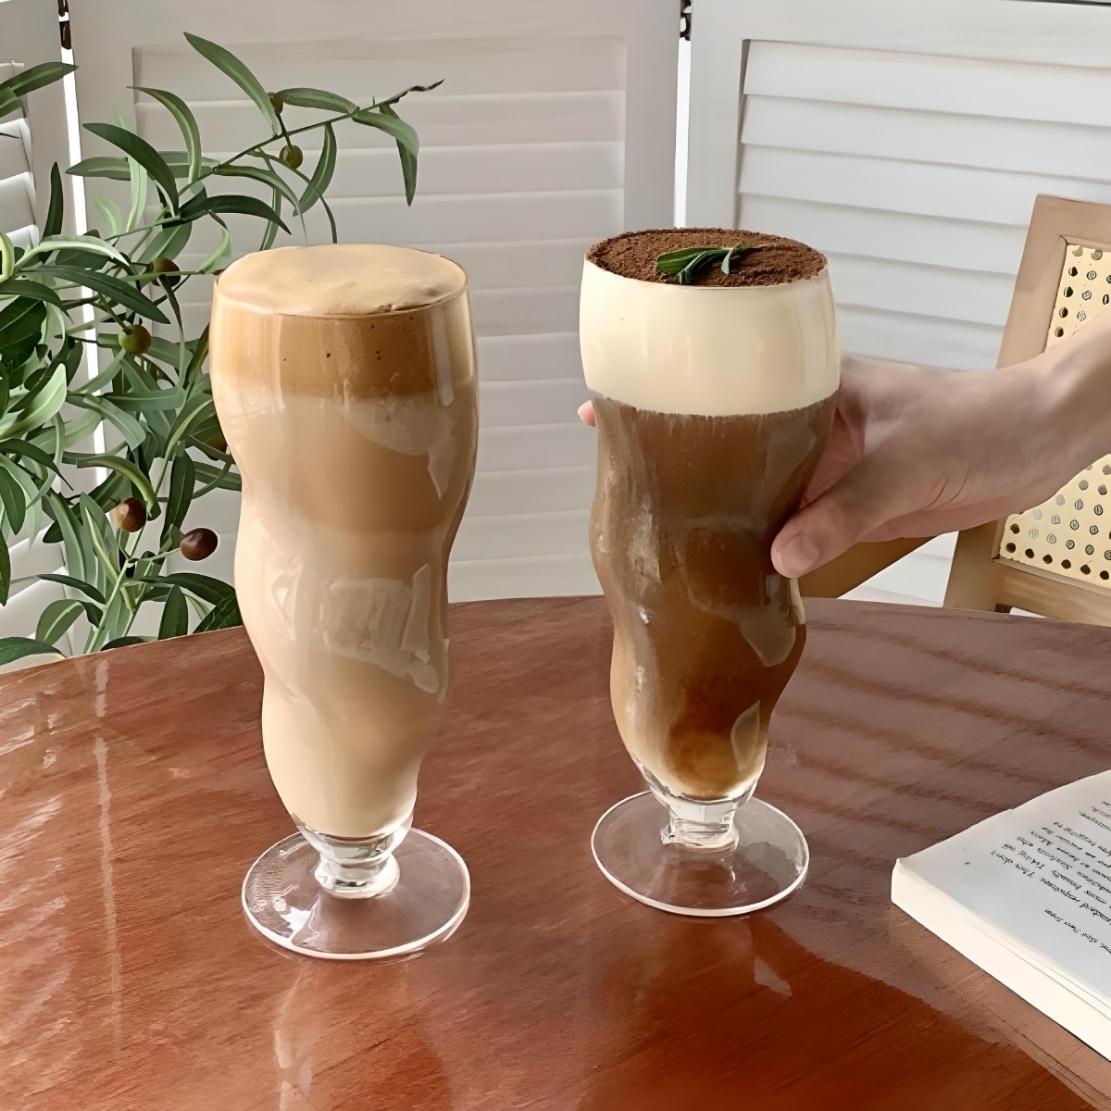 Tall, irregular trumpet shaped drinkware with coffee